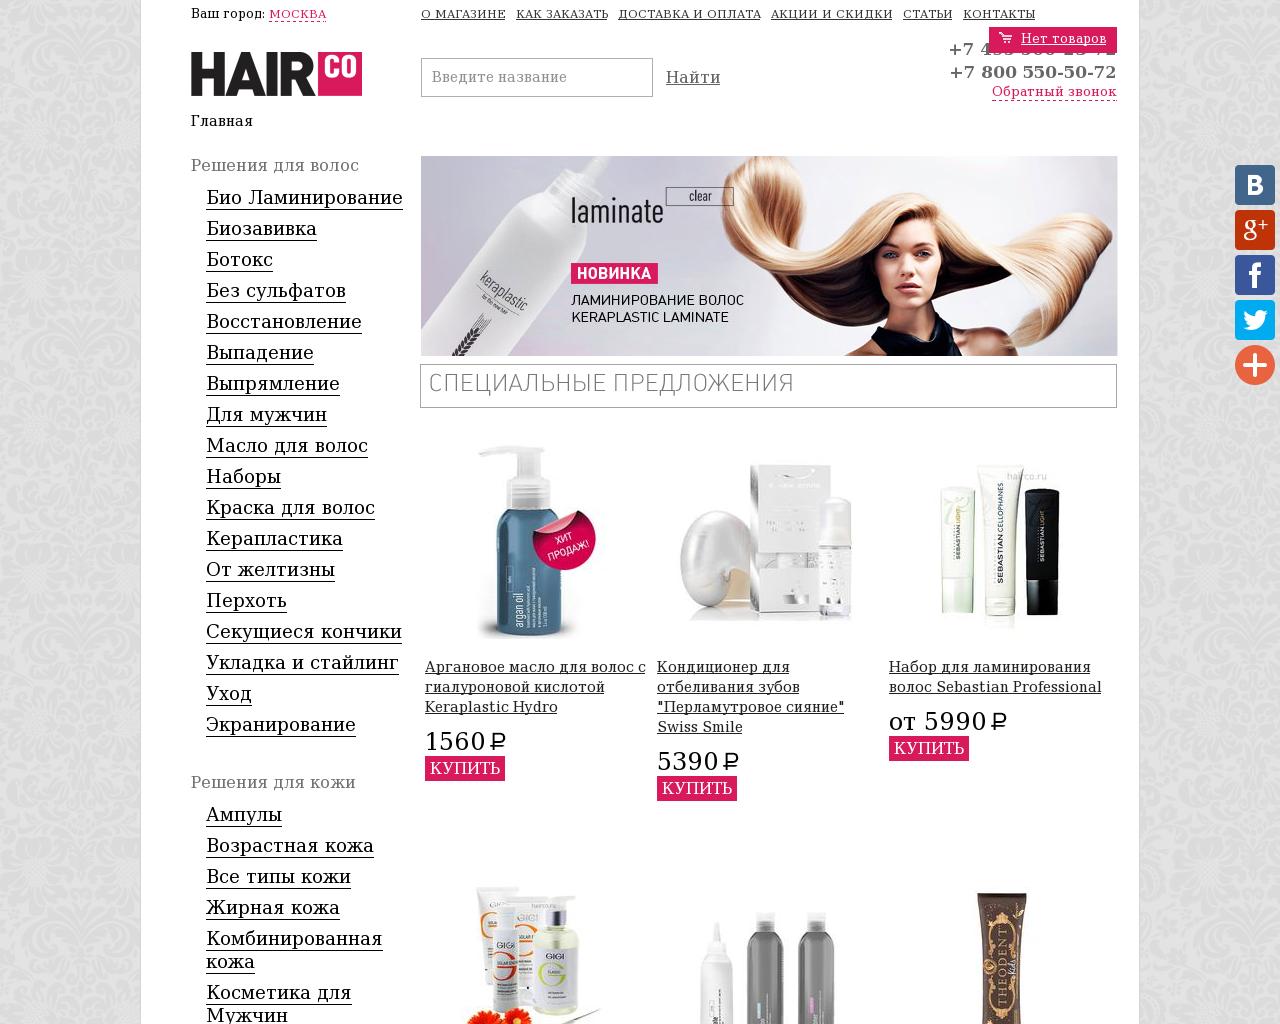 Изображение сайта hairco.ru в разрешении 1280x1024